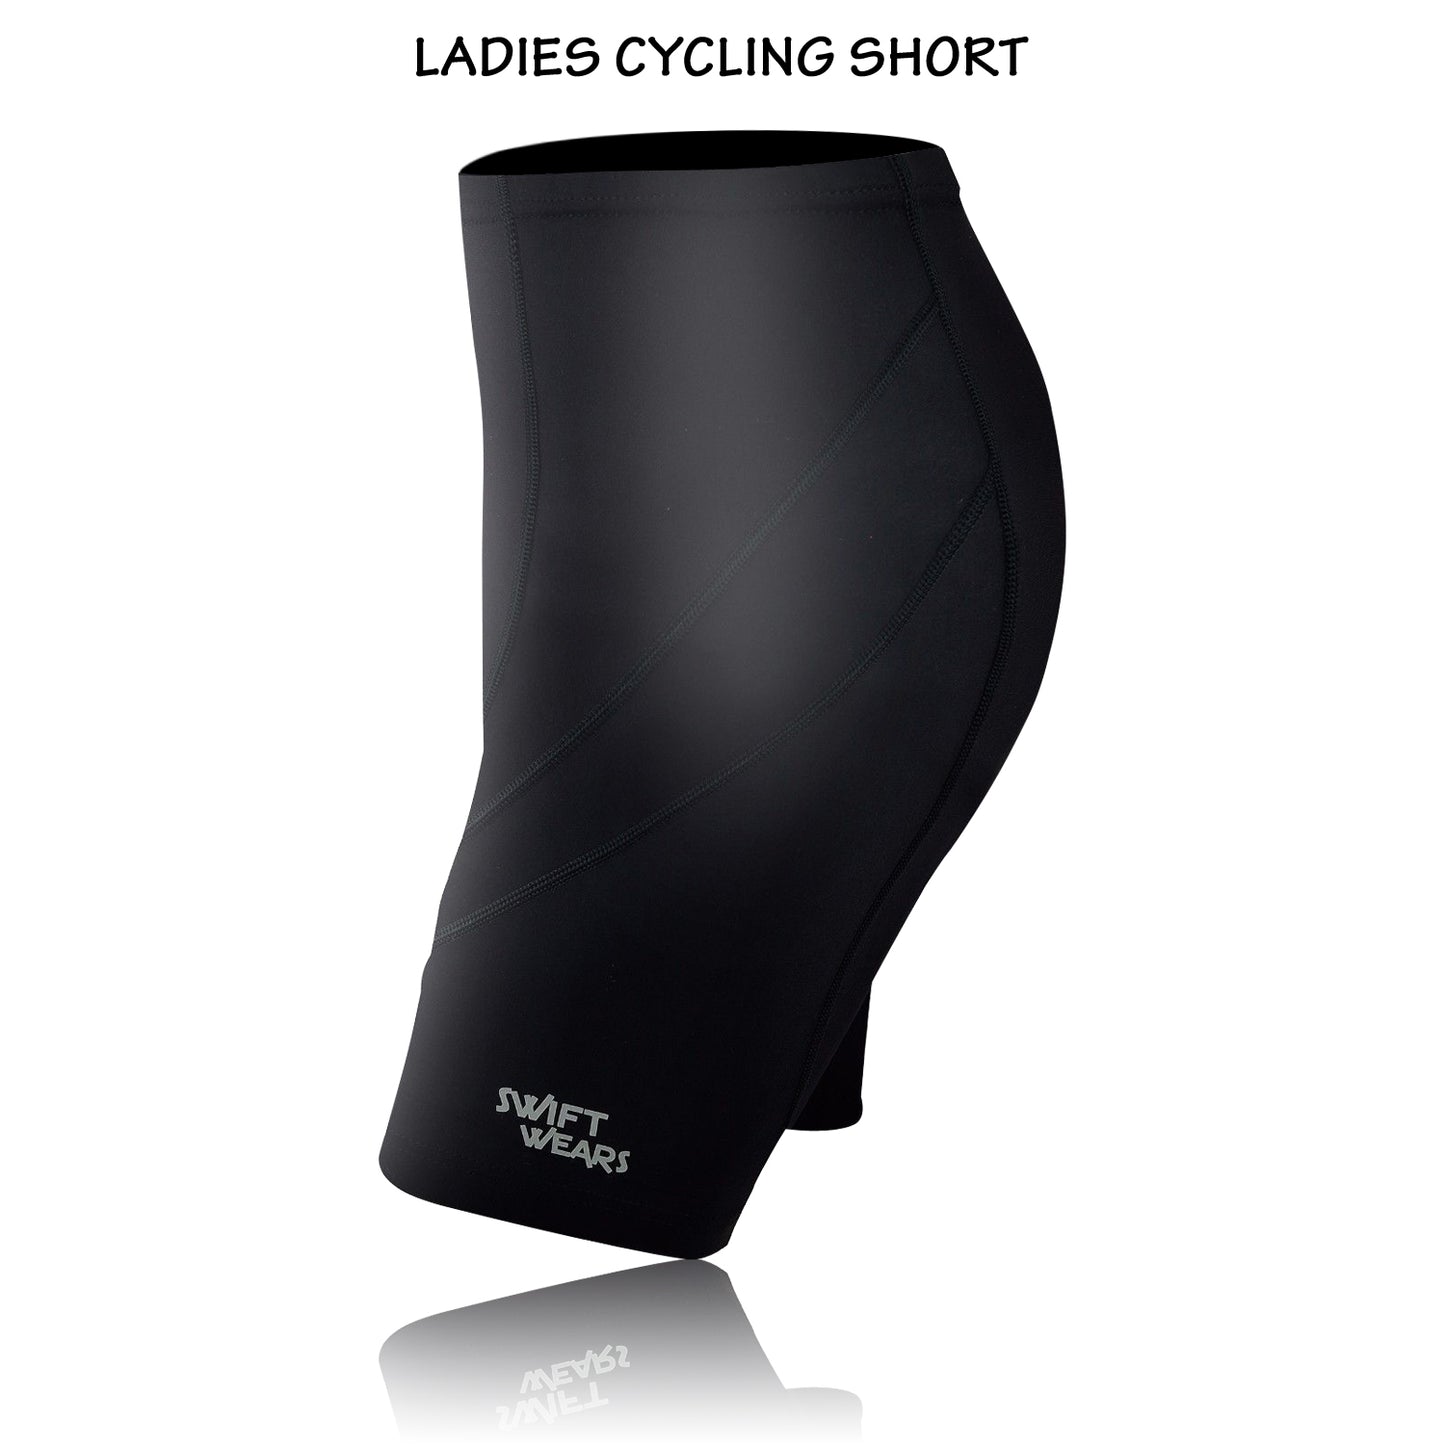 Women Cycling Tights 3/4 Shorts Padded Ladies Leggings Cool Max Anti Bac  Pad Uk